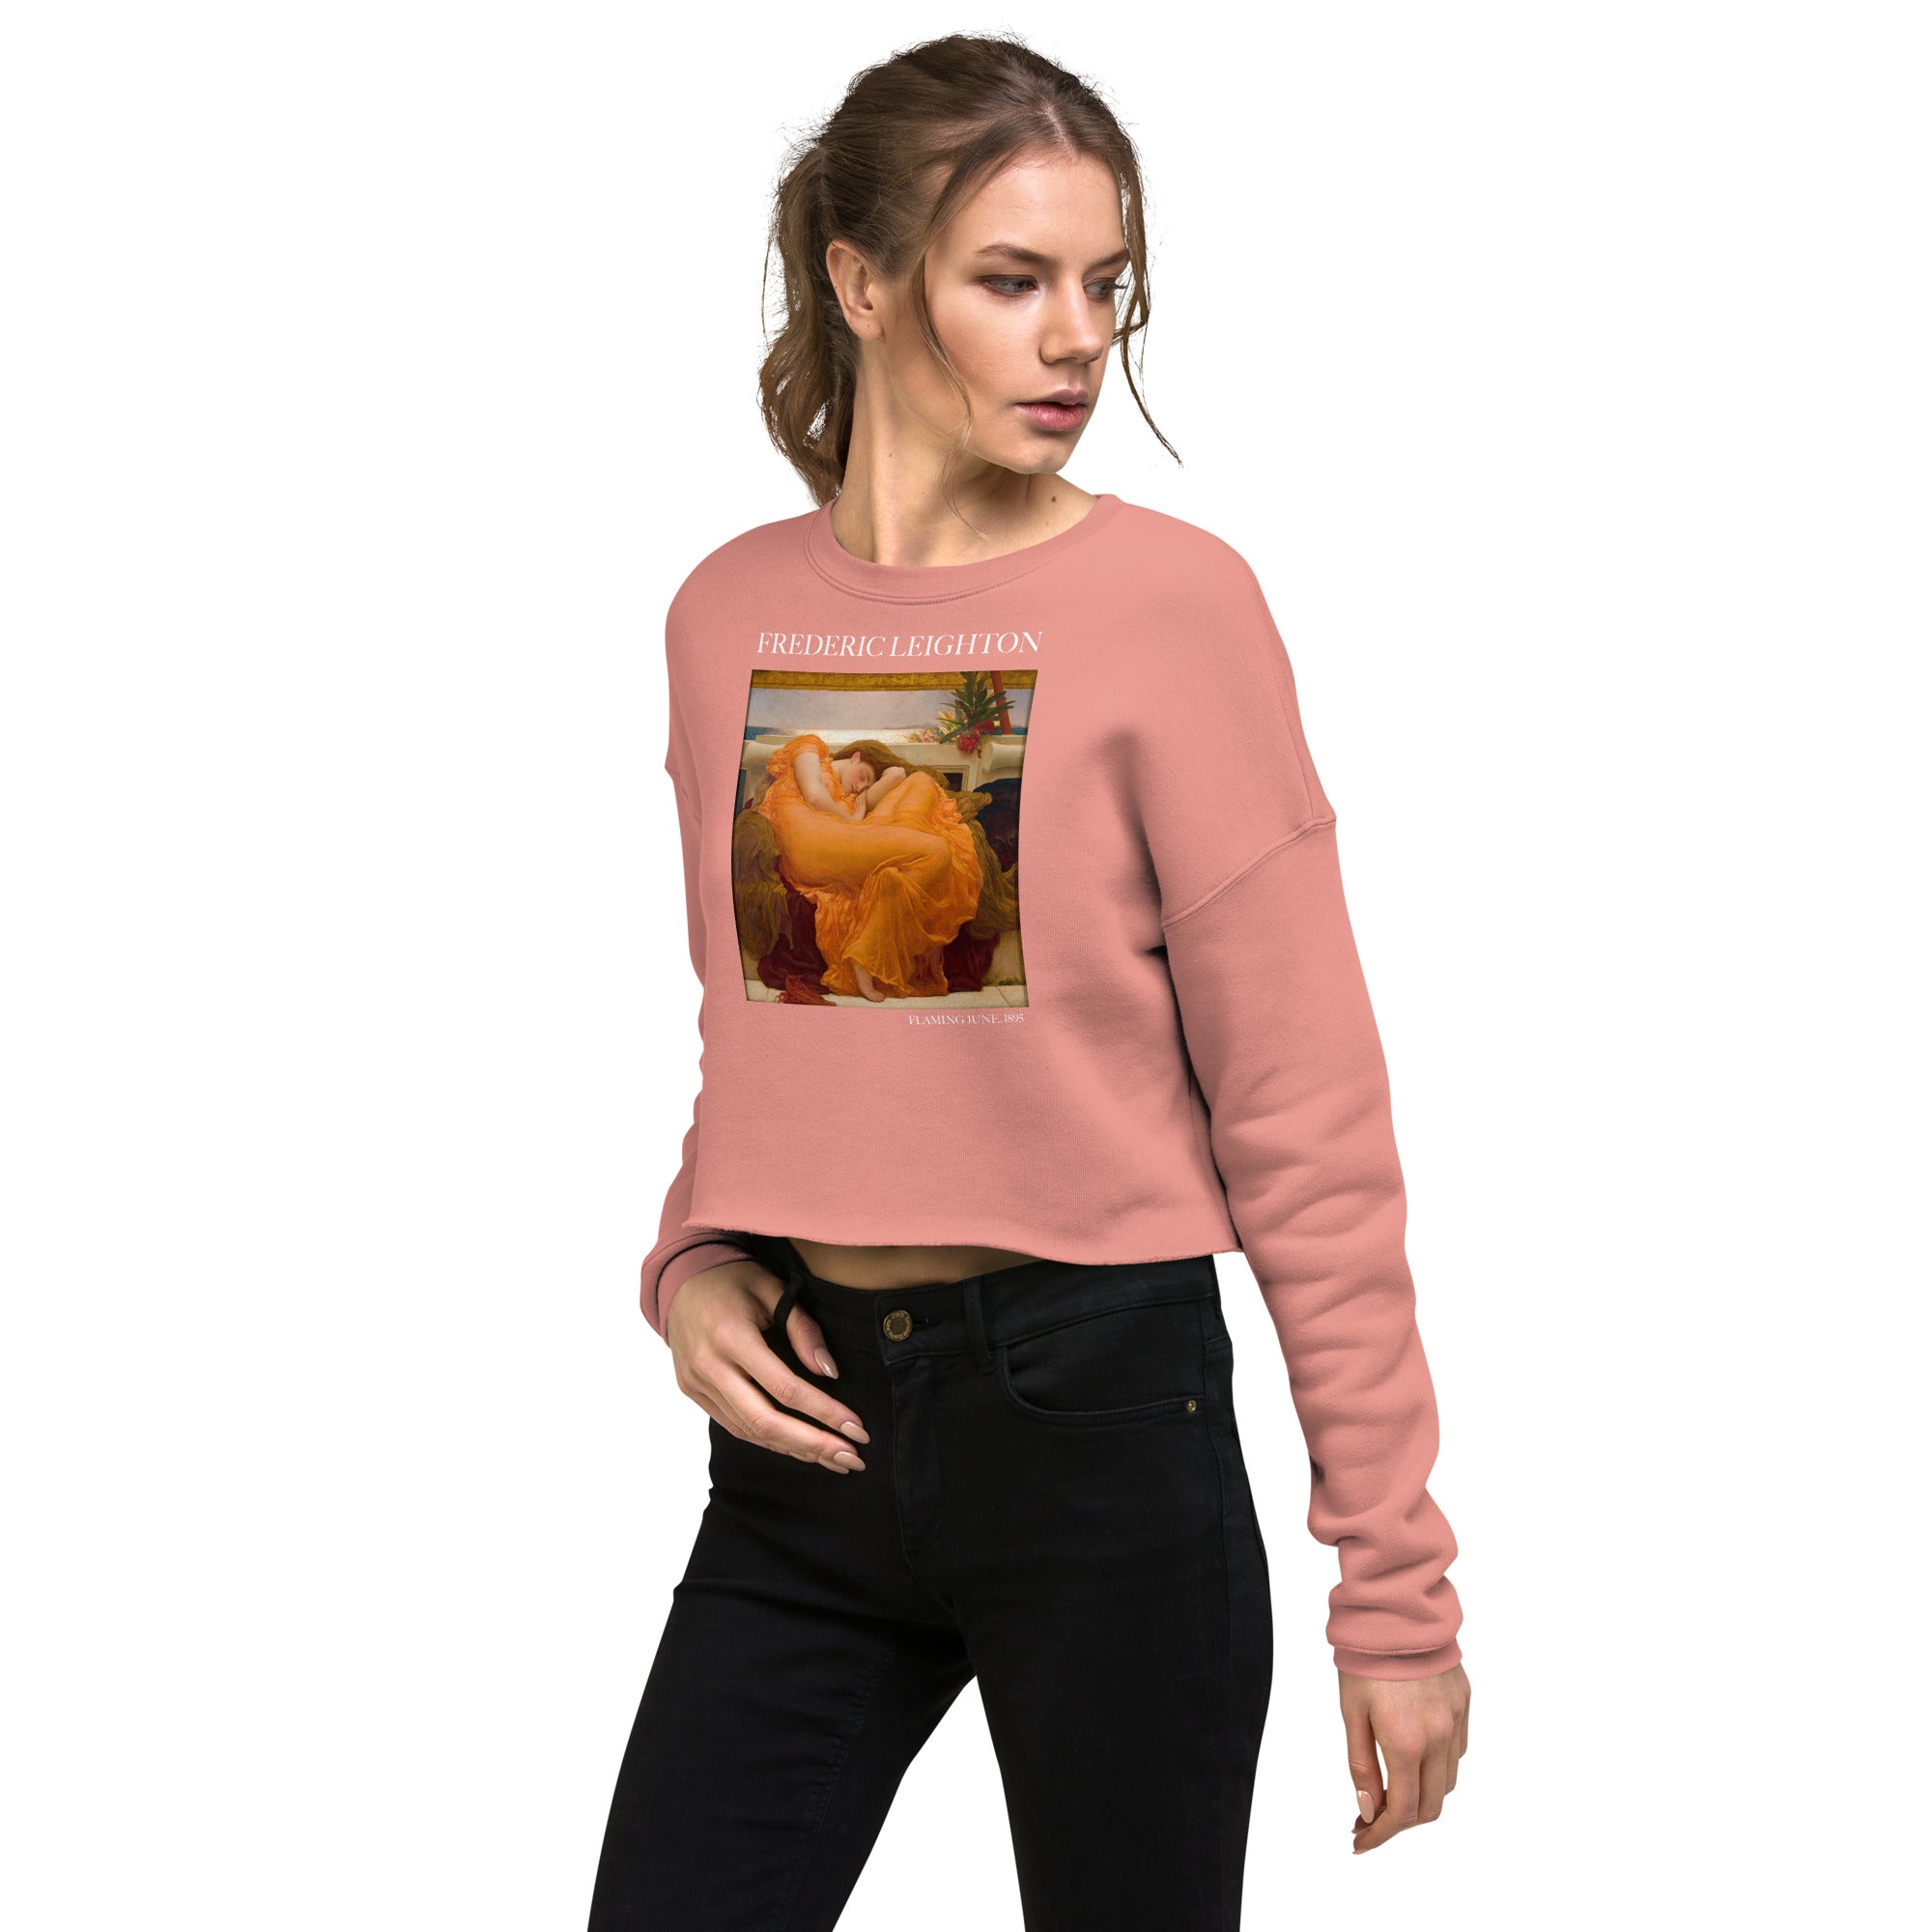 Frederic Leighton 'Flaming June' Famous Painting Cropped Sweatshirt | Premium Art Cropped Sweatshirt